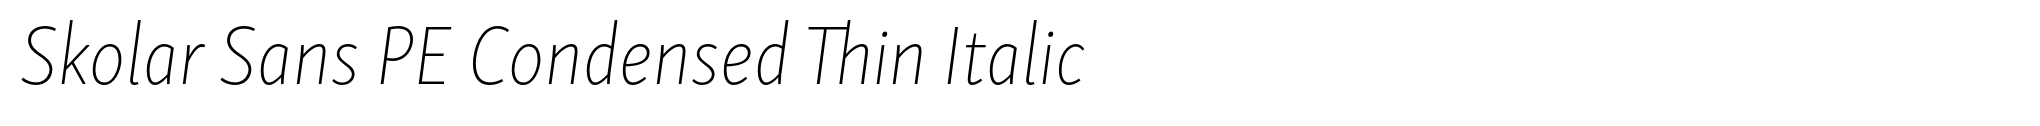 Skolar Sans PE Condensed Thin Italic image